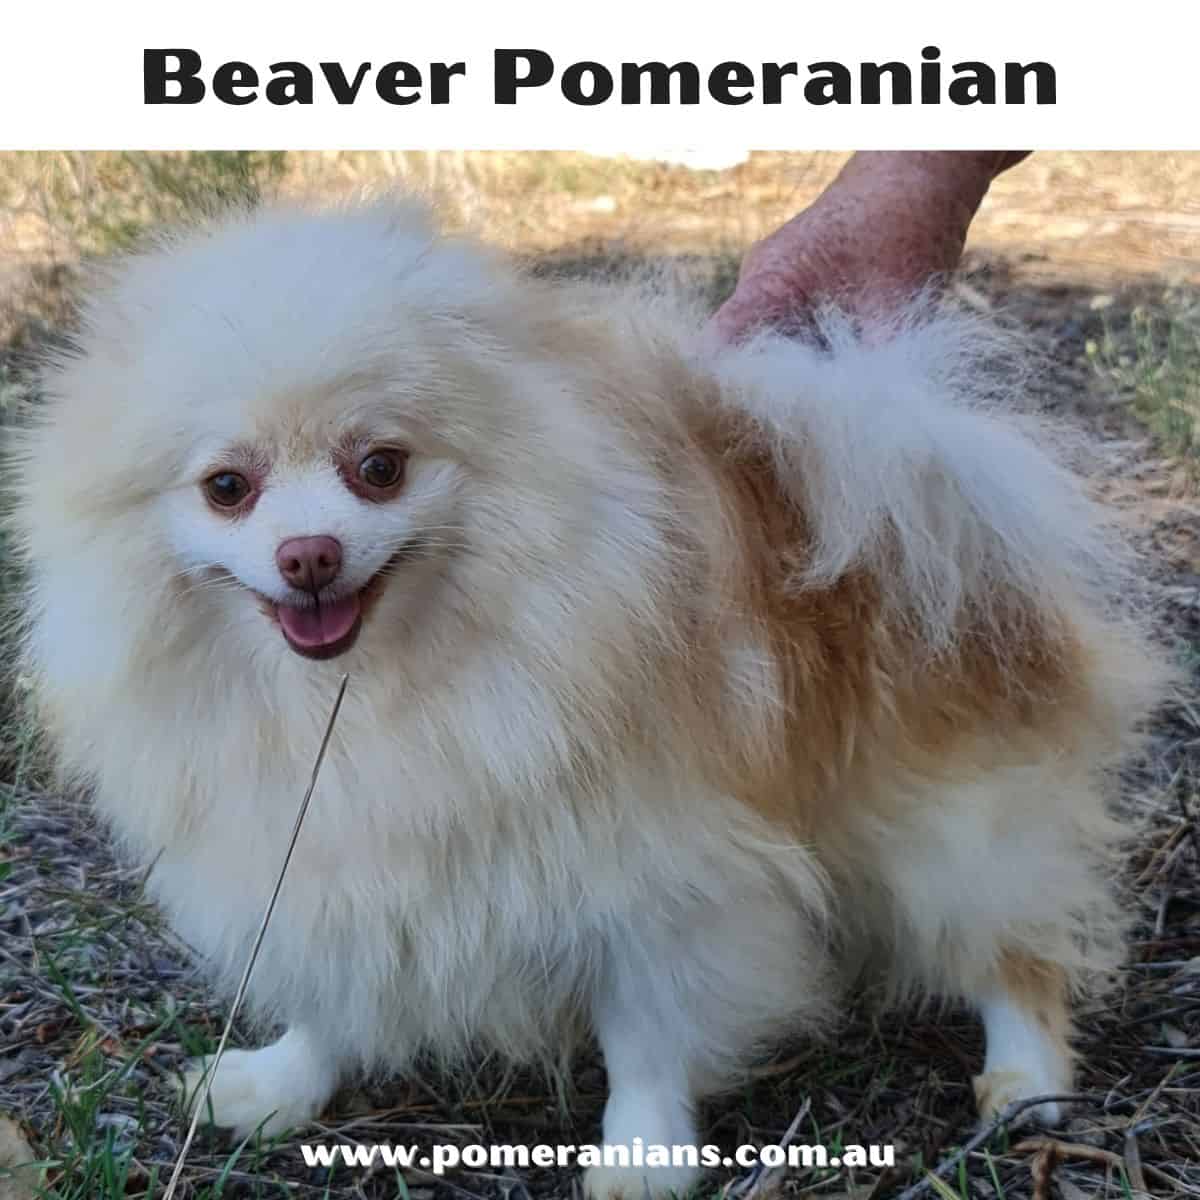 Beaver Pomeranian